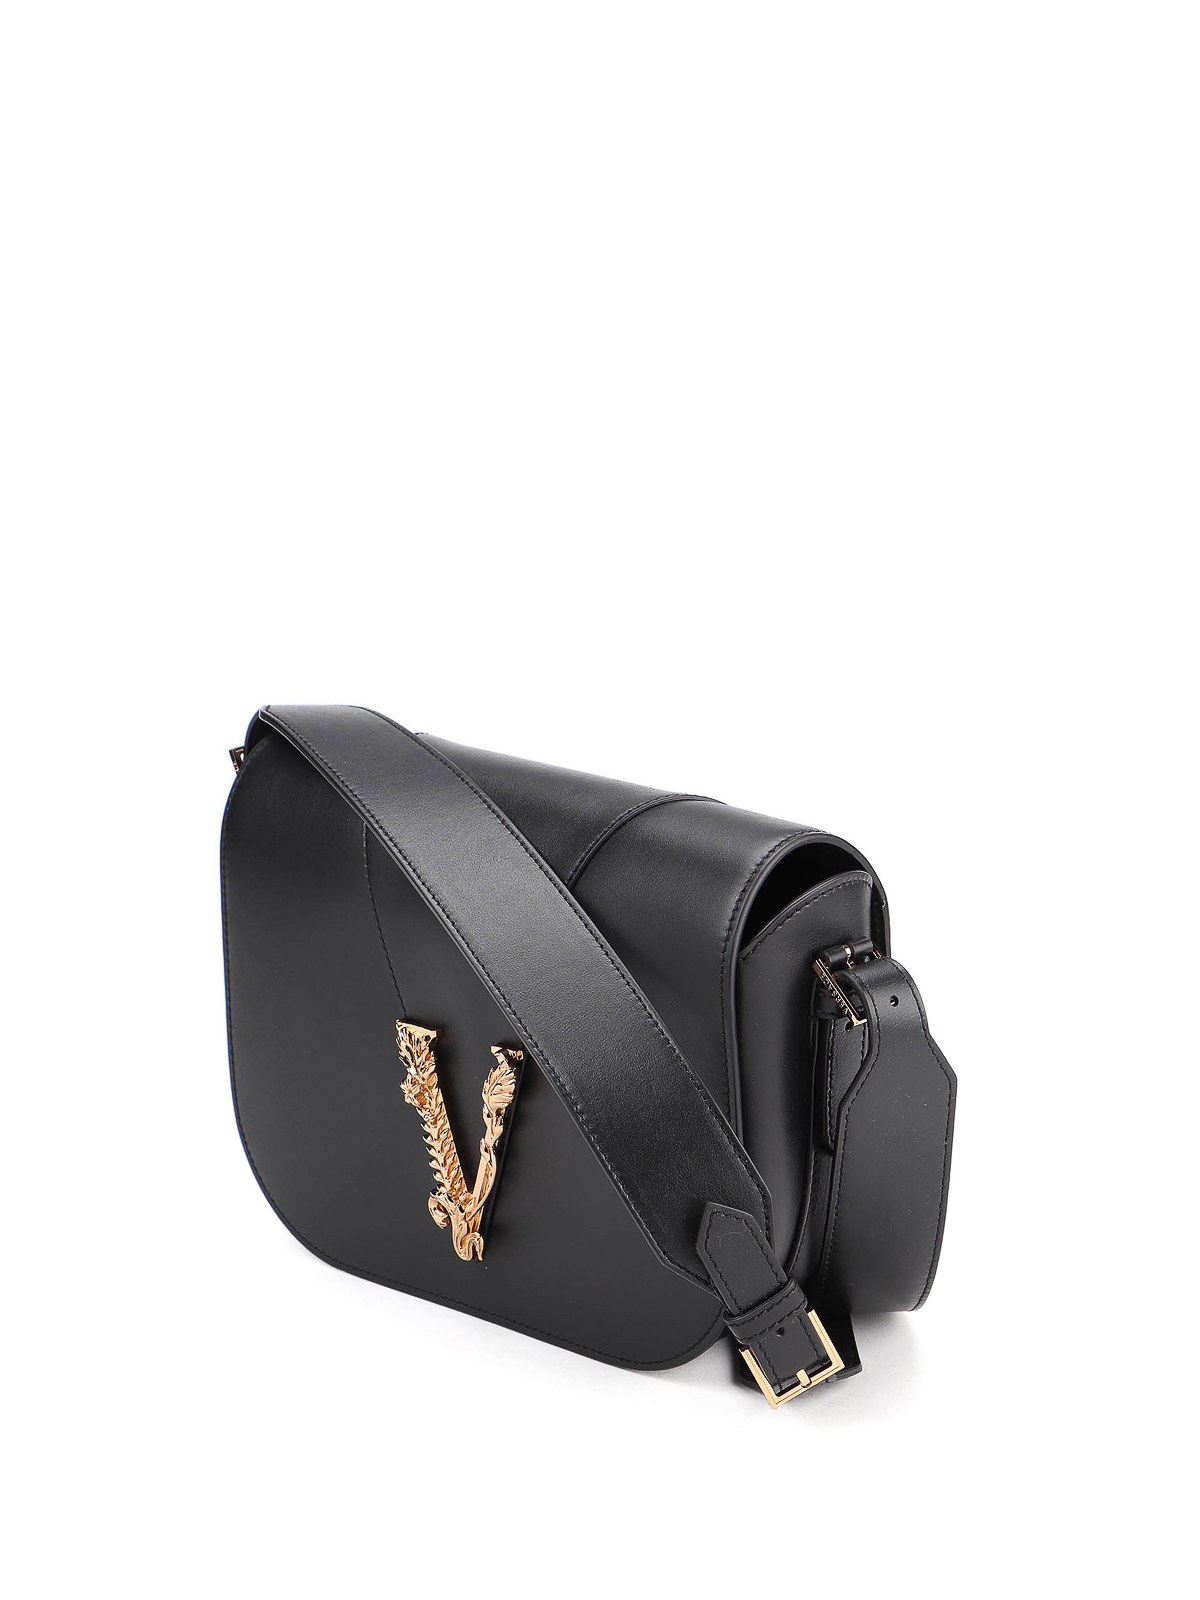 Versace, Bags, Versace Virtus Shoulder Bag In White